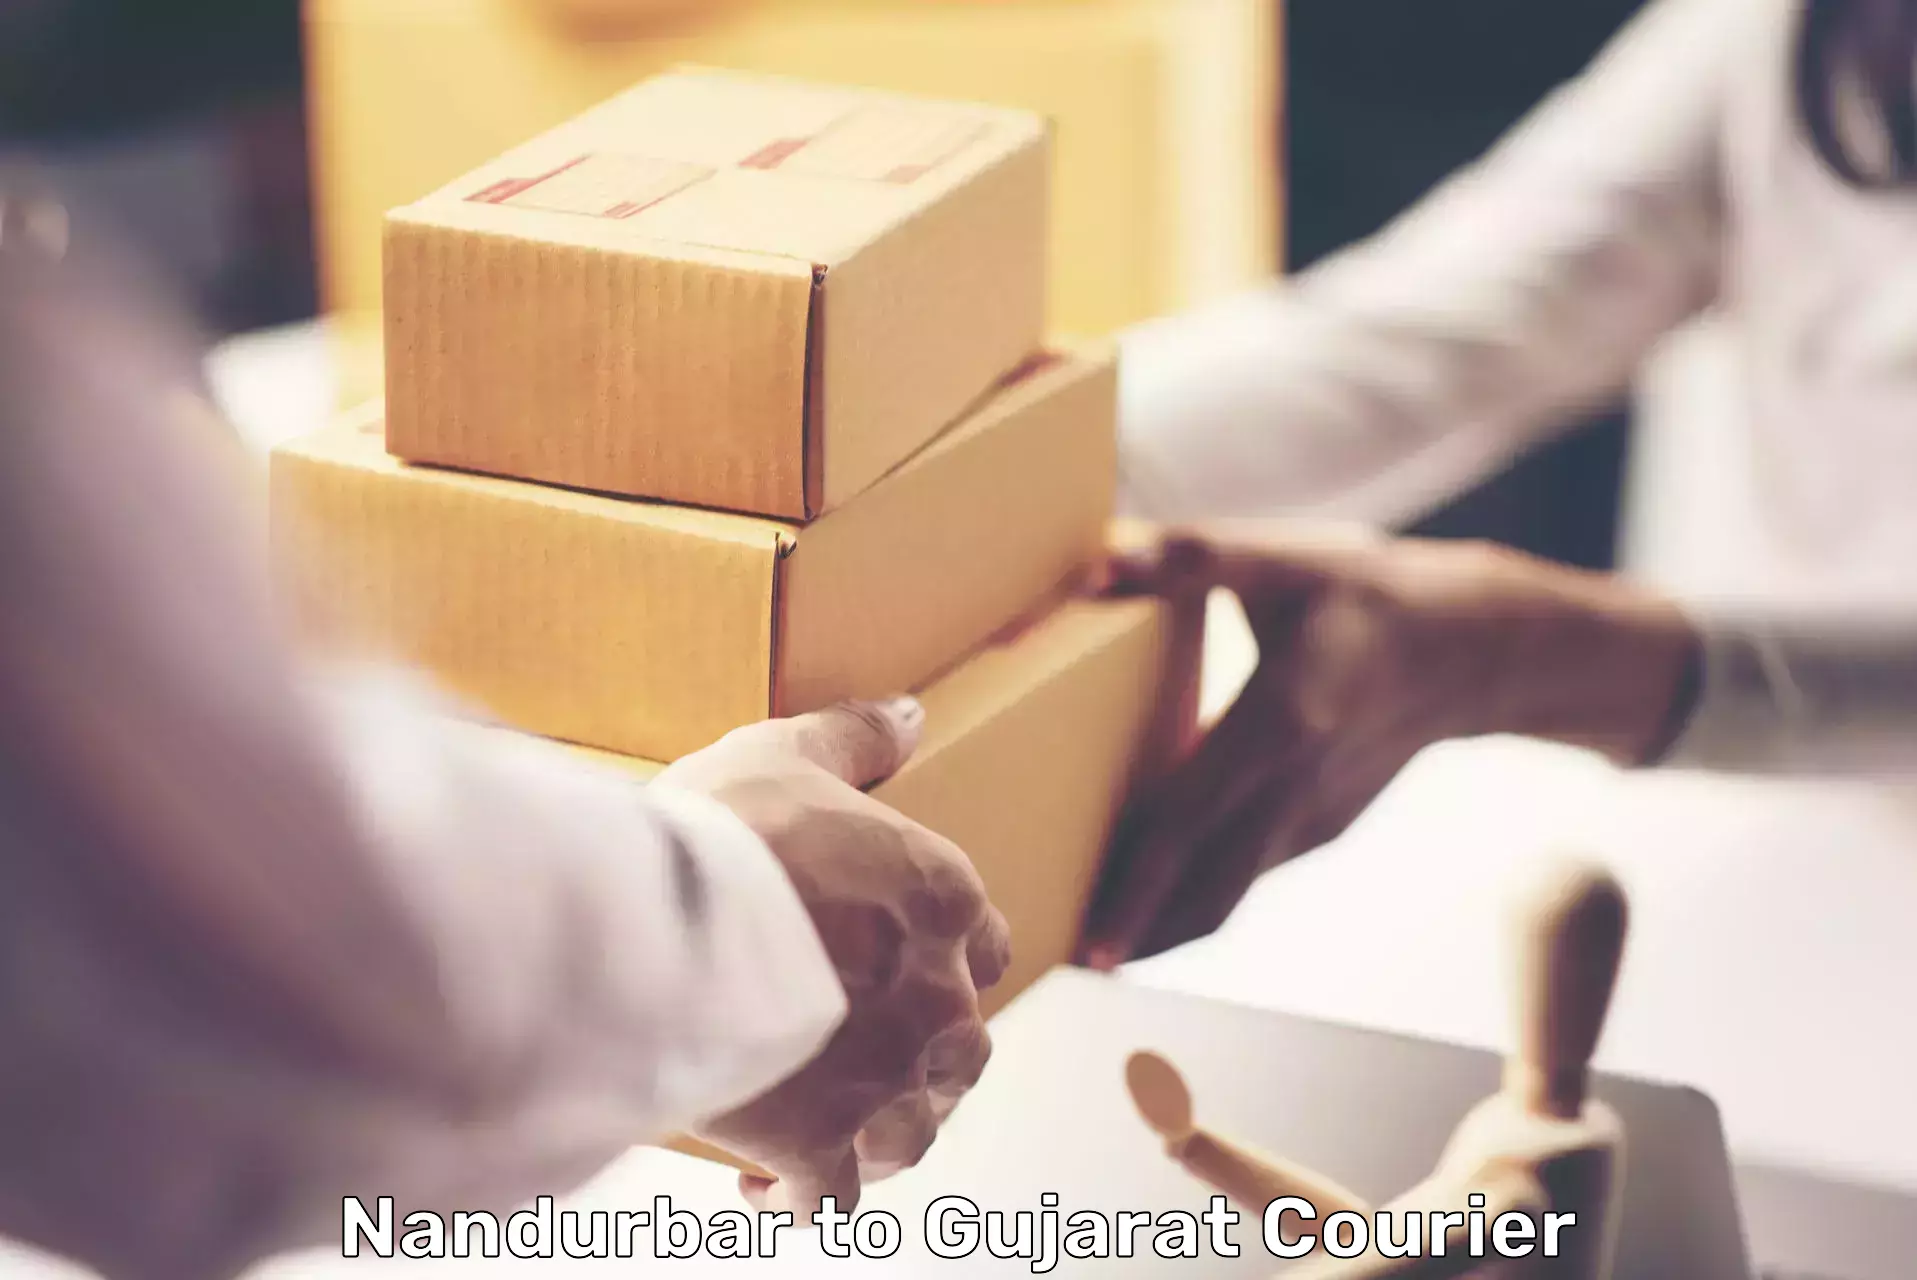 24-hour courier service in Nandurbar to Modasa